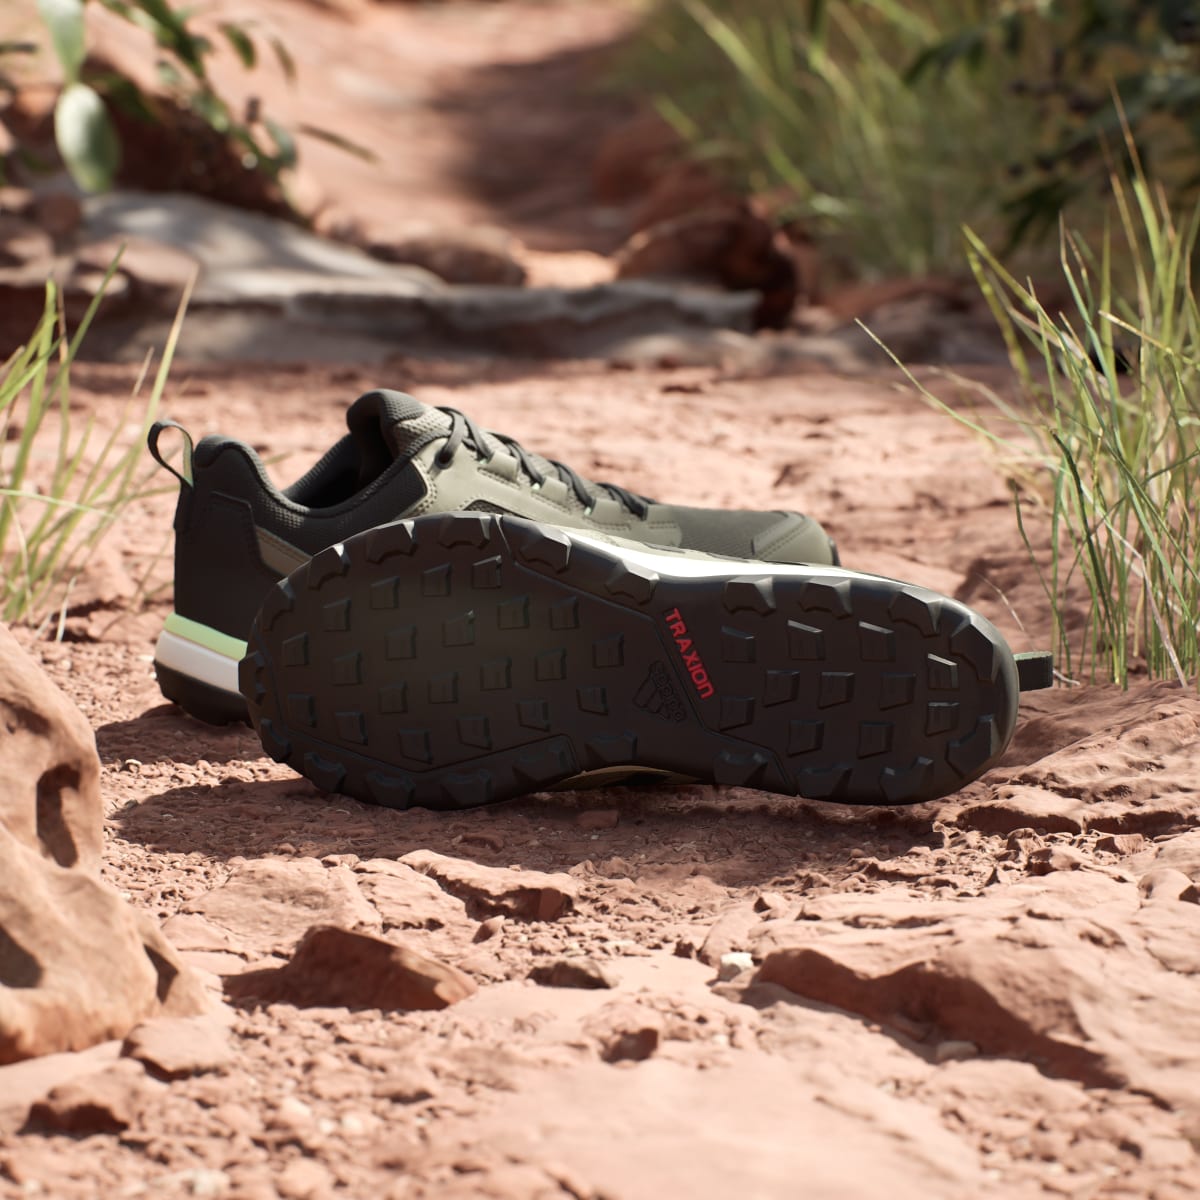 Adidas Tracerocker 2.0 Trail Running Shoes. 4